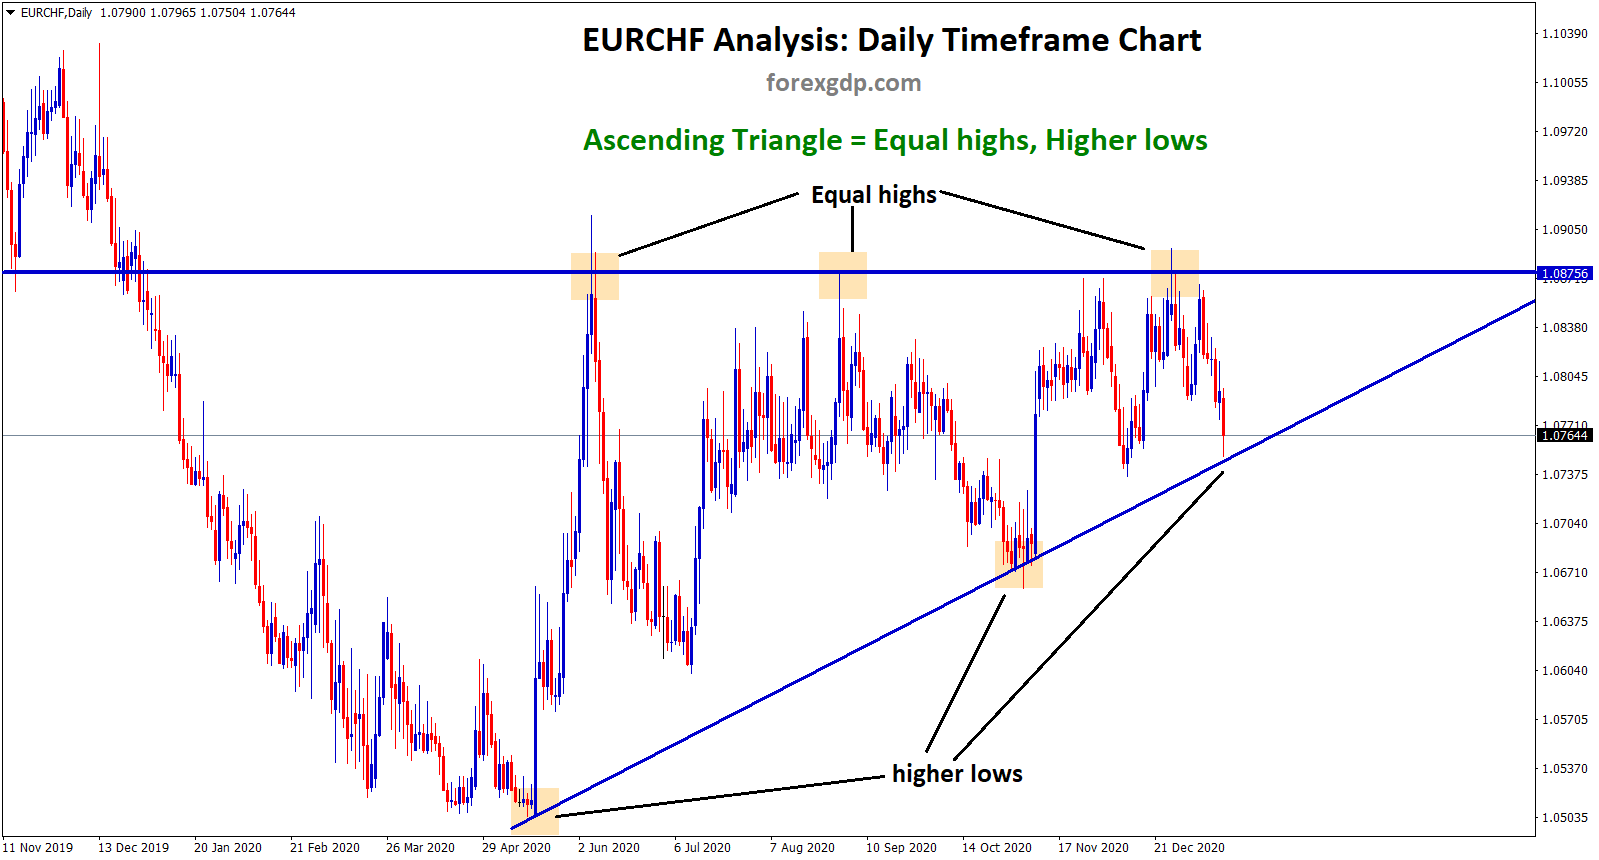 EURCHF Ascending Triangle pattern 1